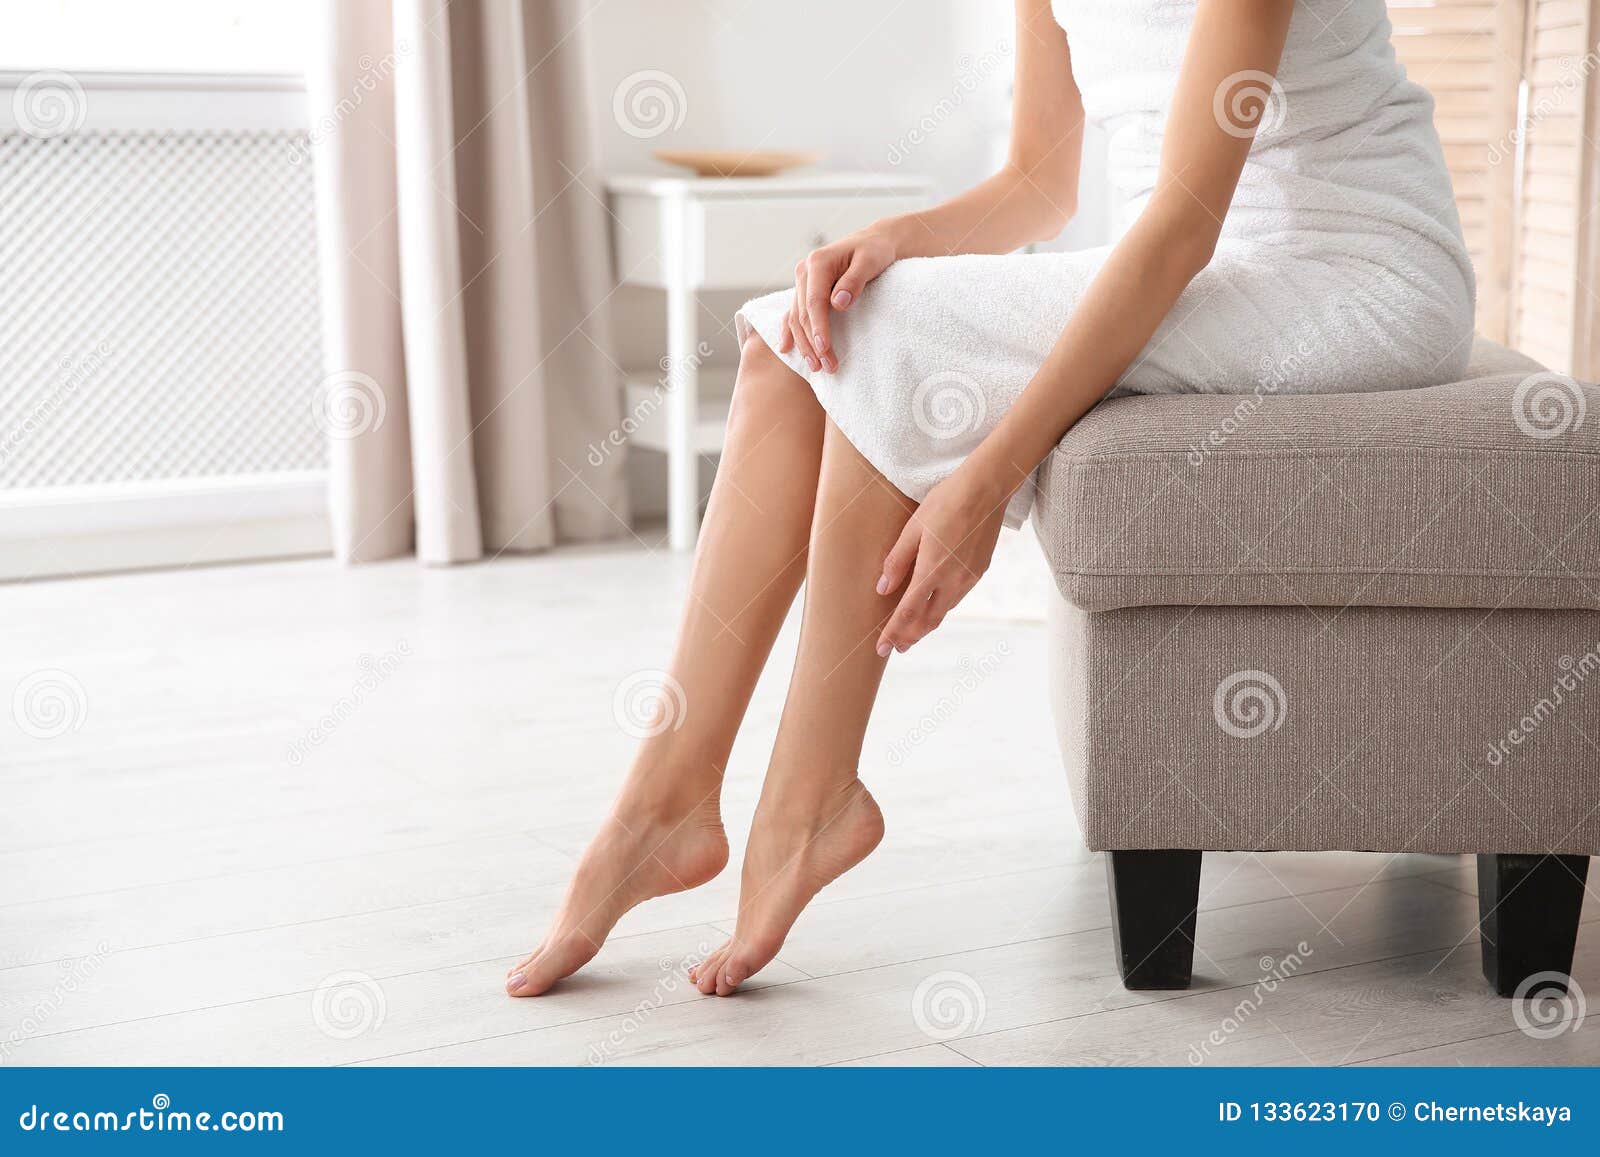 danielle rogers share beautiful legs pics photos